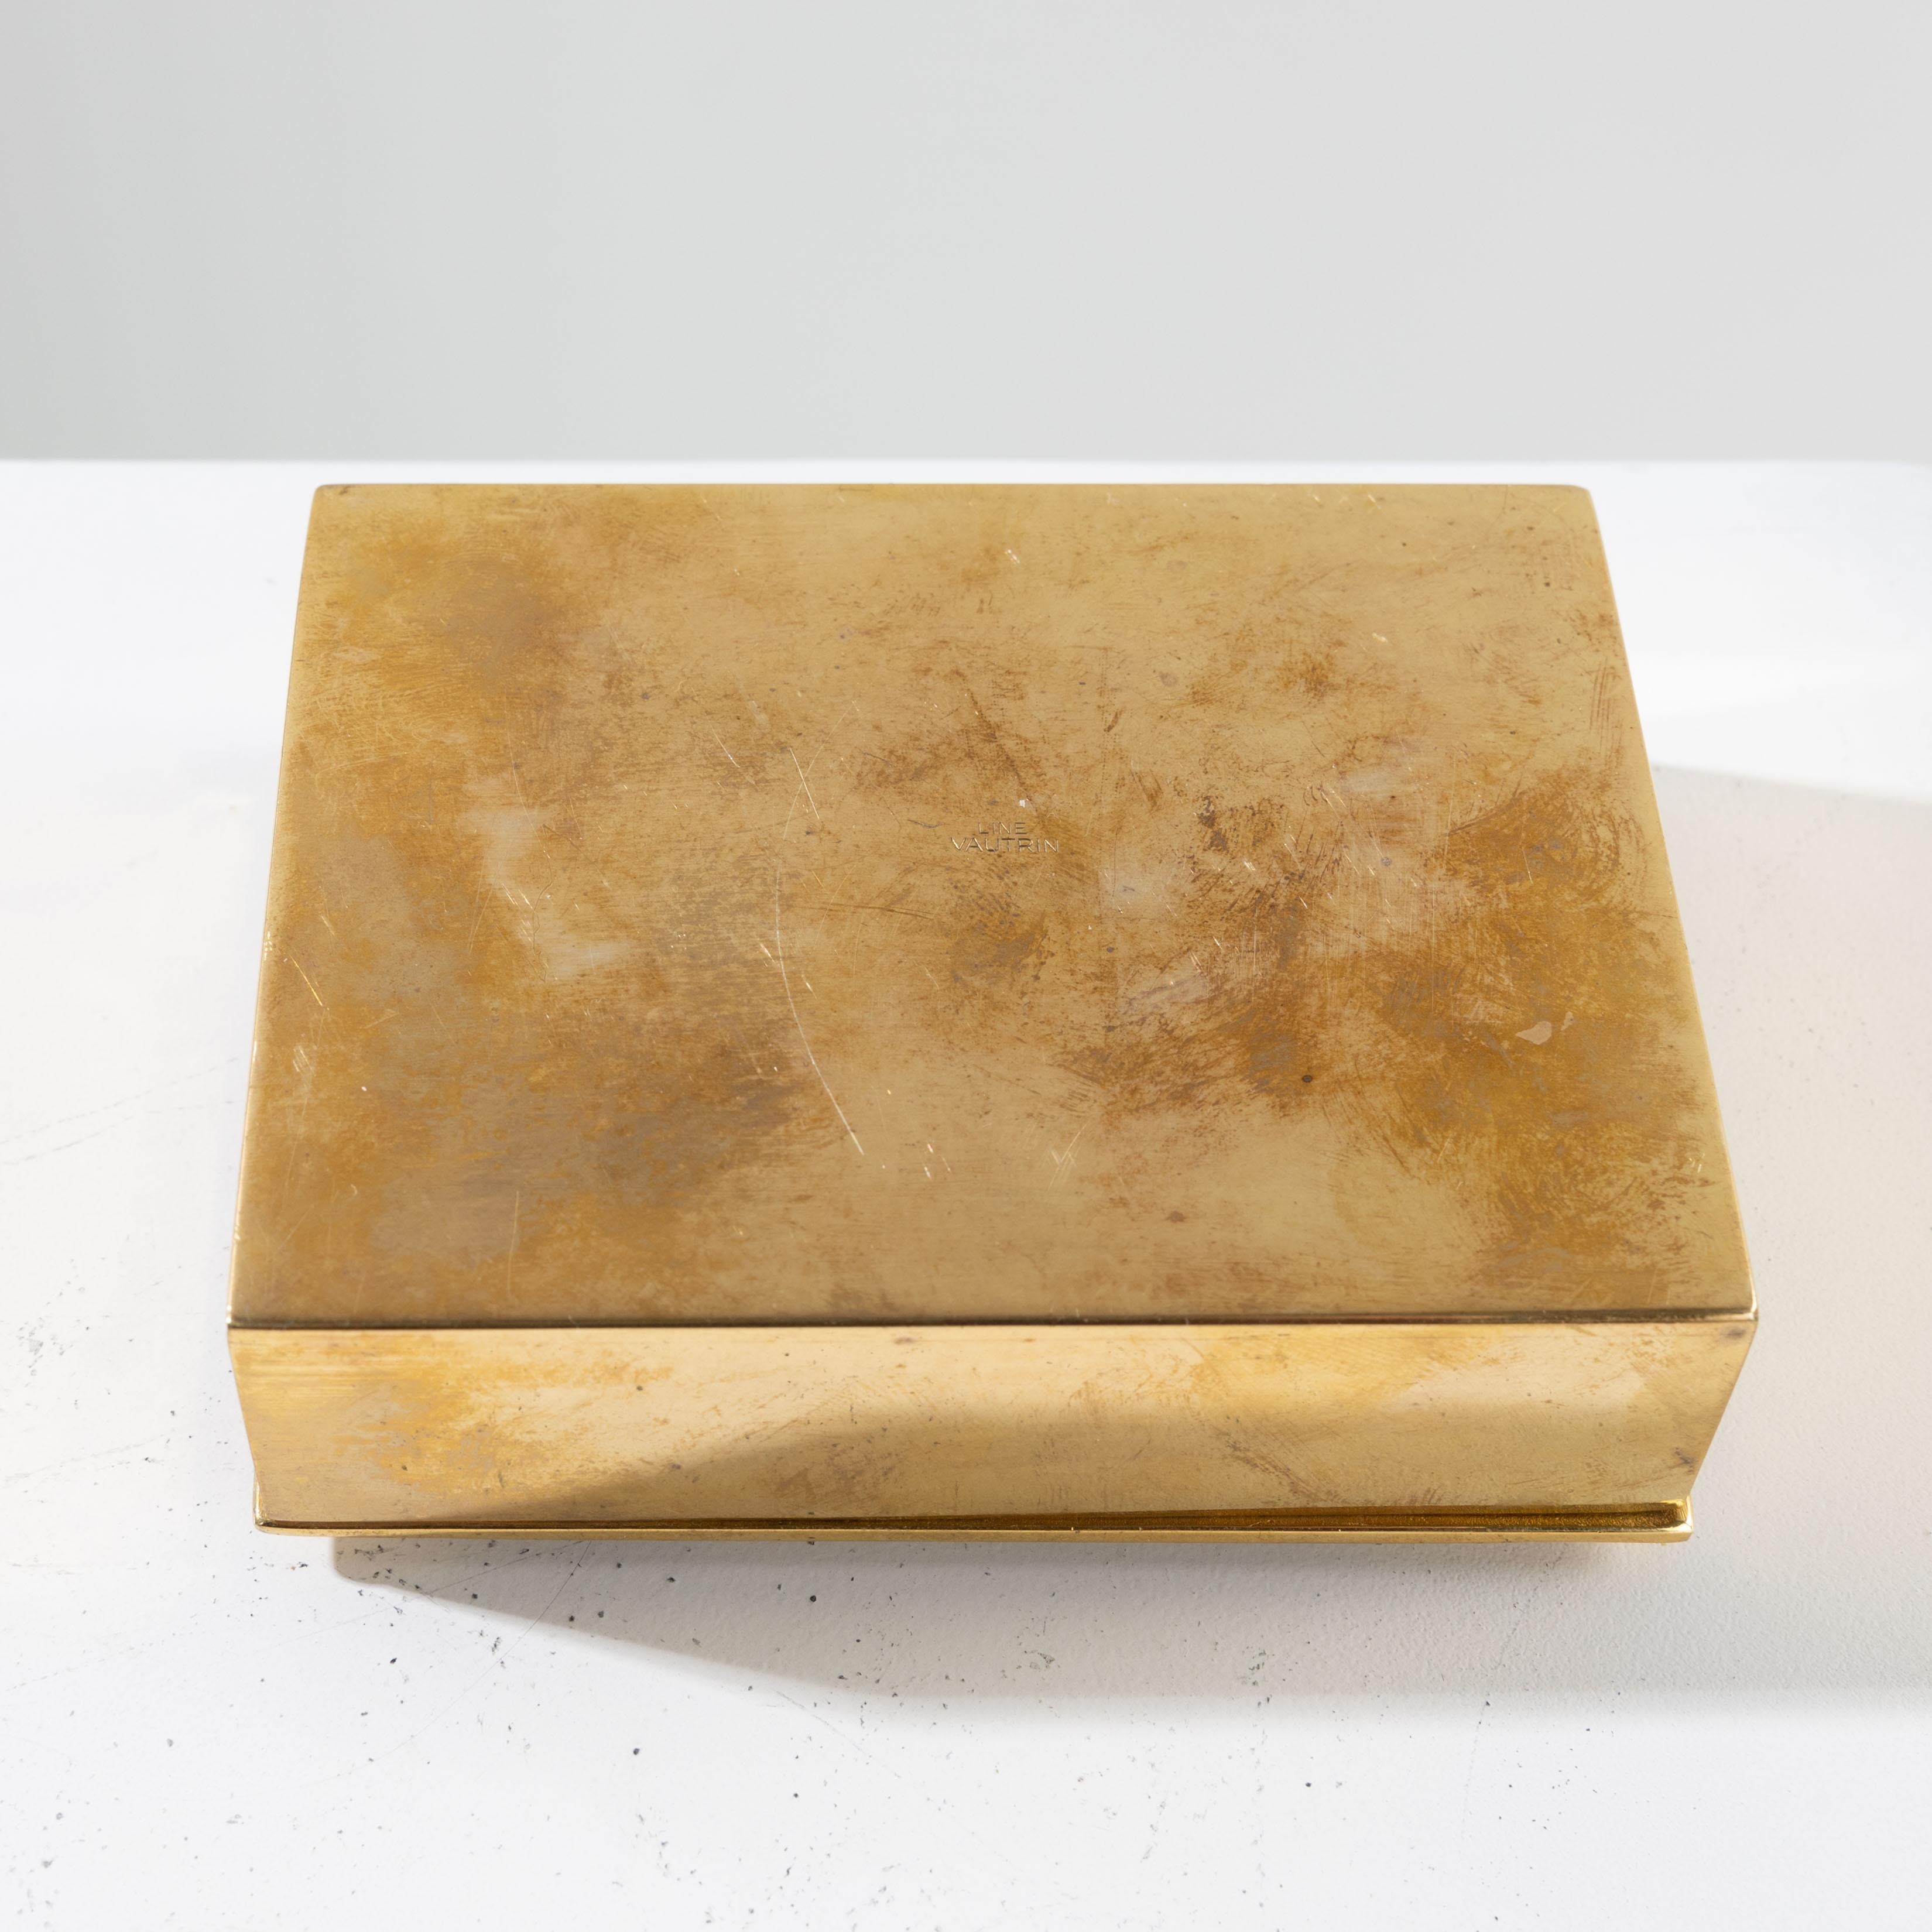 L'étoile a pleuré rose de Line Vautrin - Rara caja de bronce dorado en venta 5